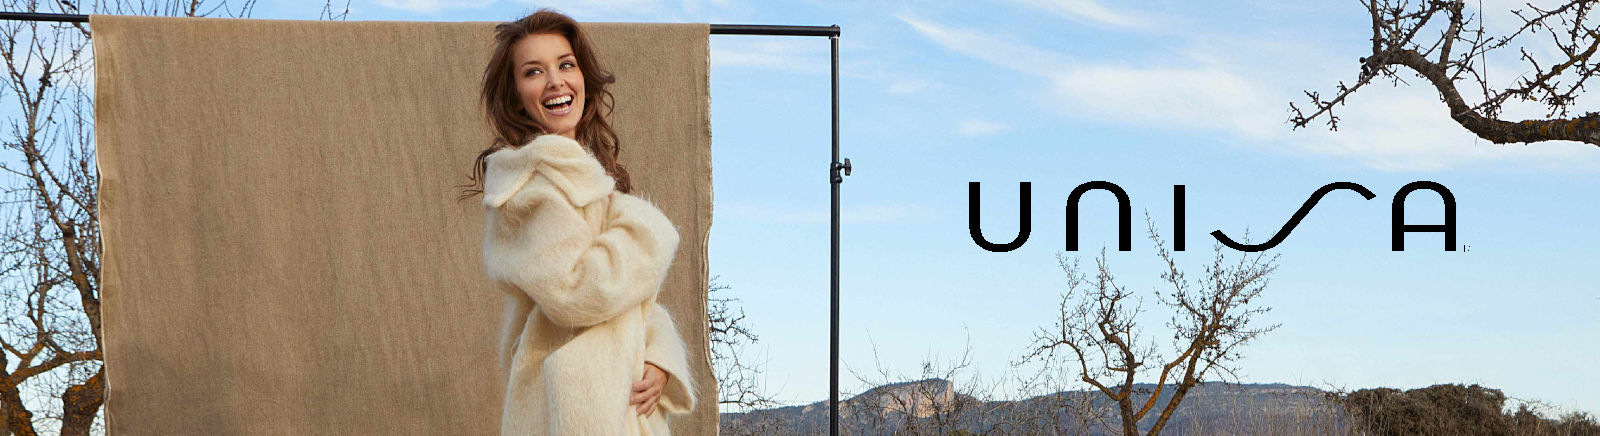 Juppen: Unisa Plateau-Sandalen für Damen online shoppen